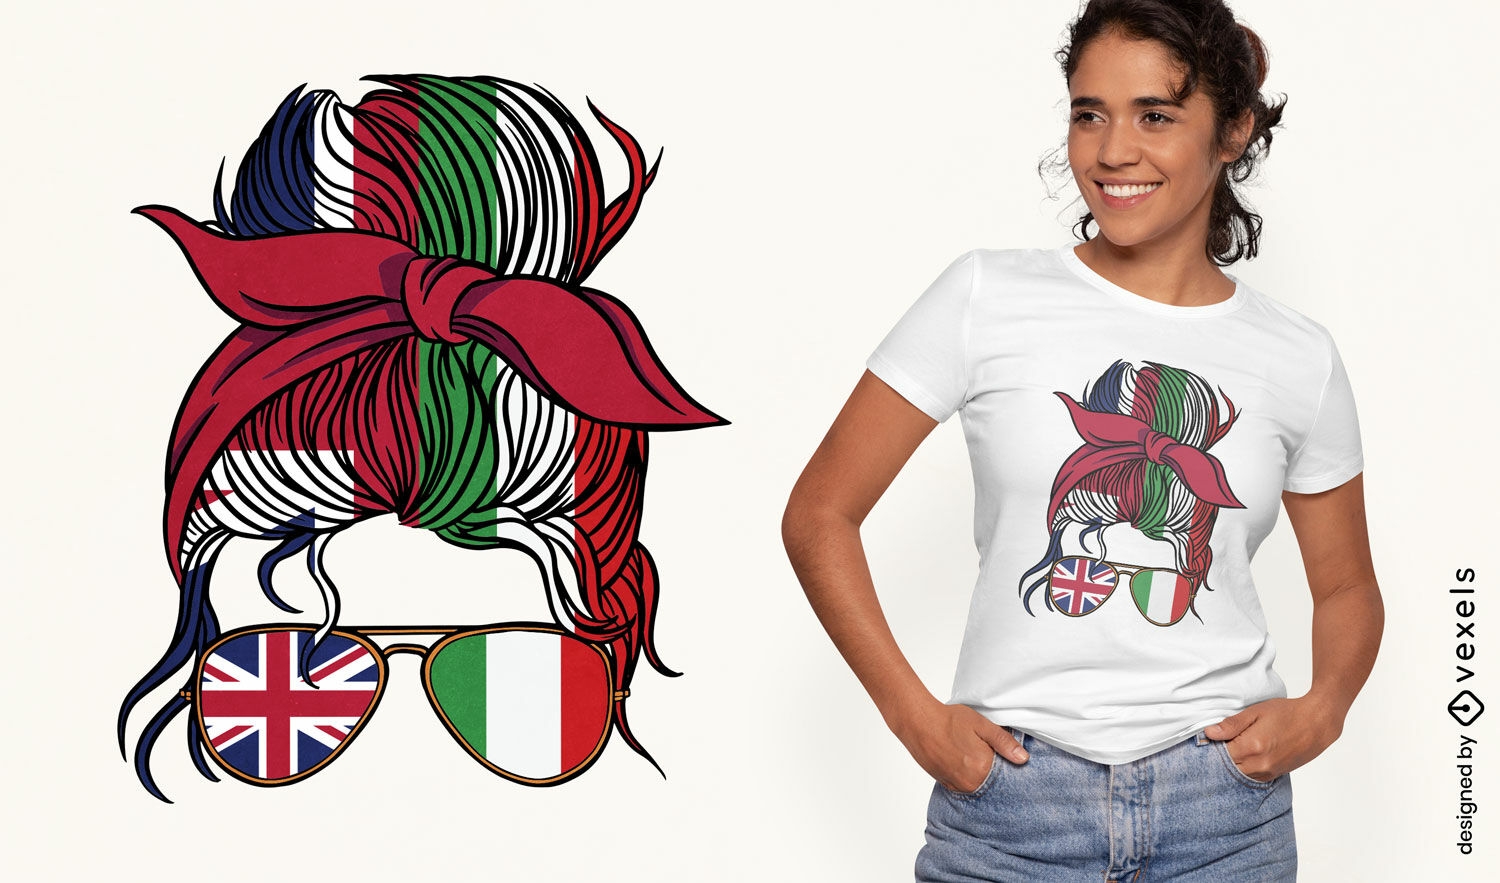 Uk and Italian flags t-shirt design